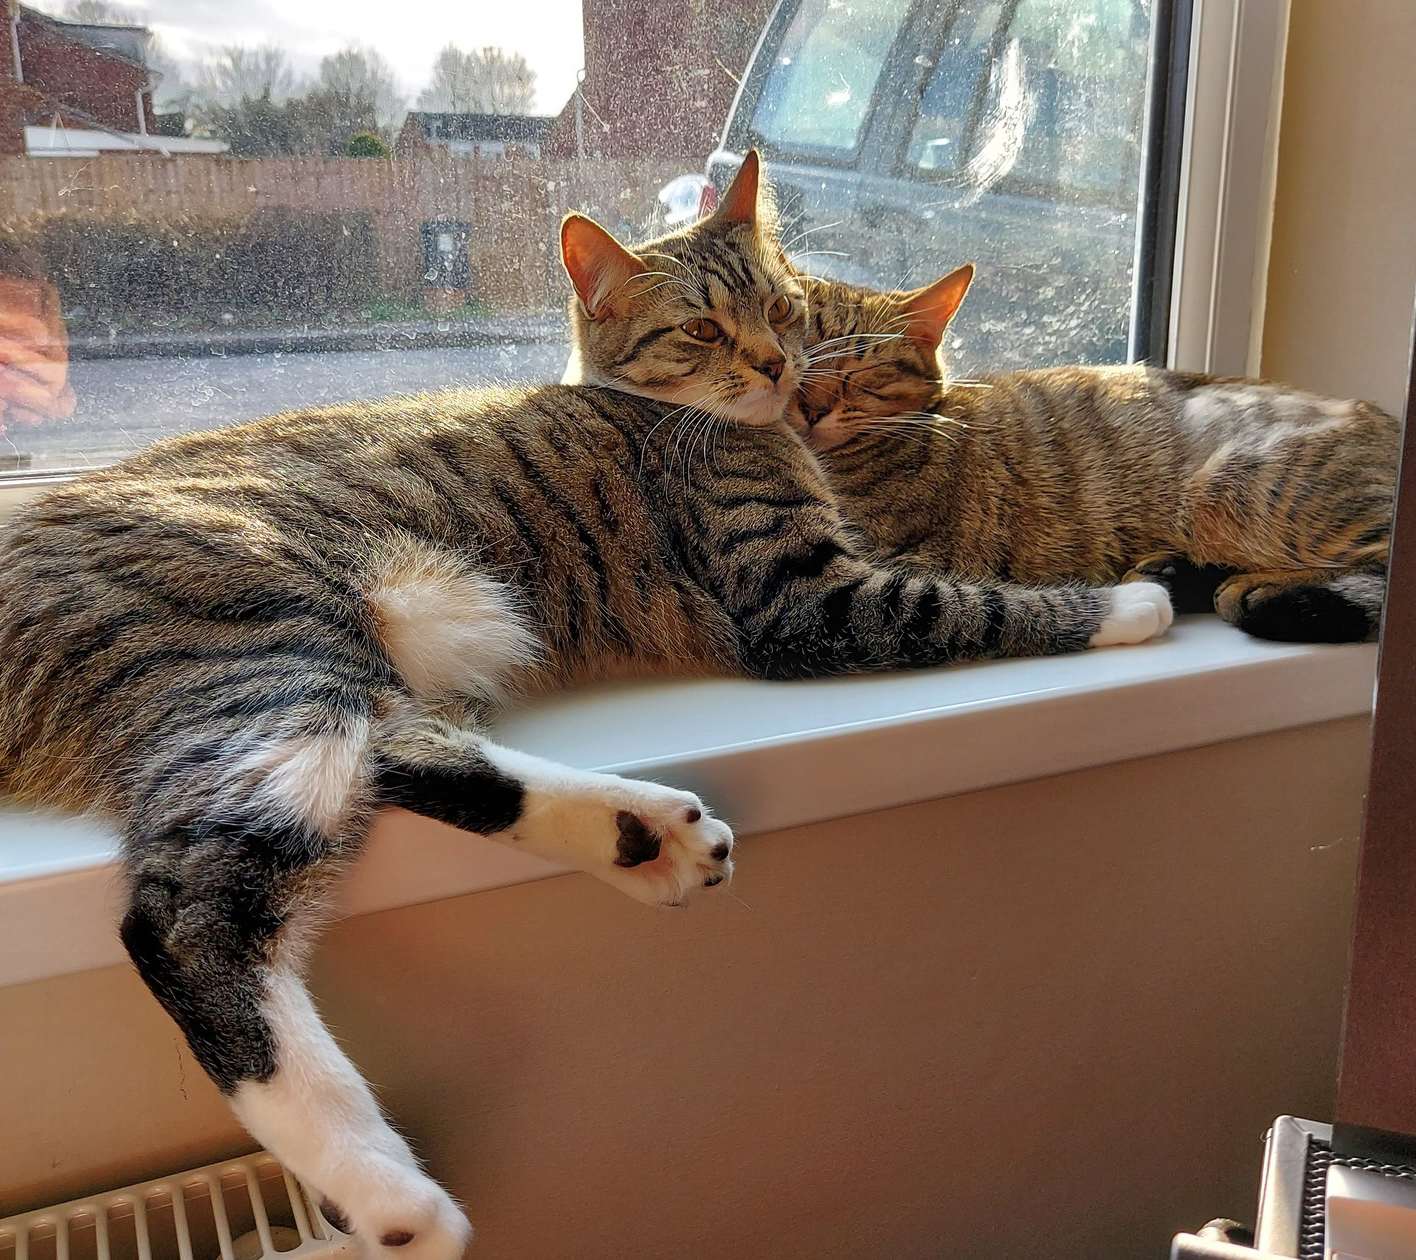 Hope and Joy cuddled up together on a sunny windowsill